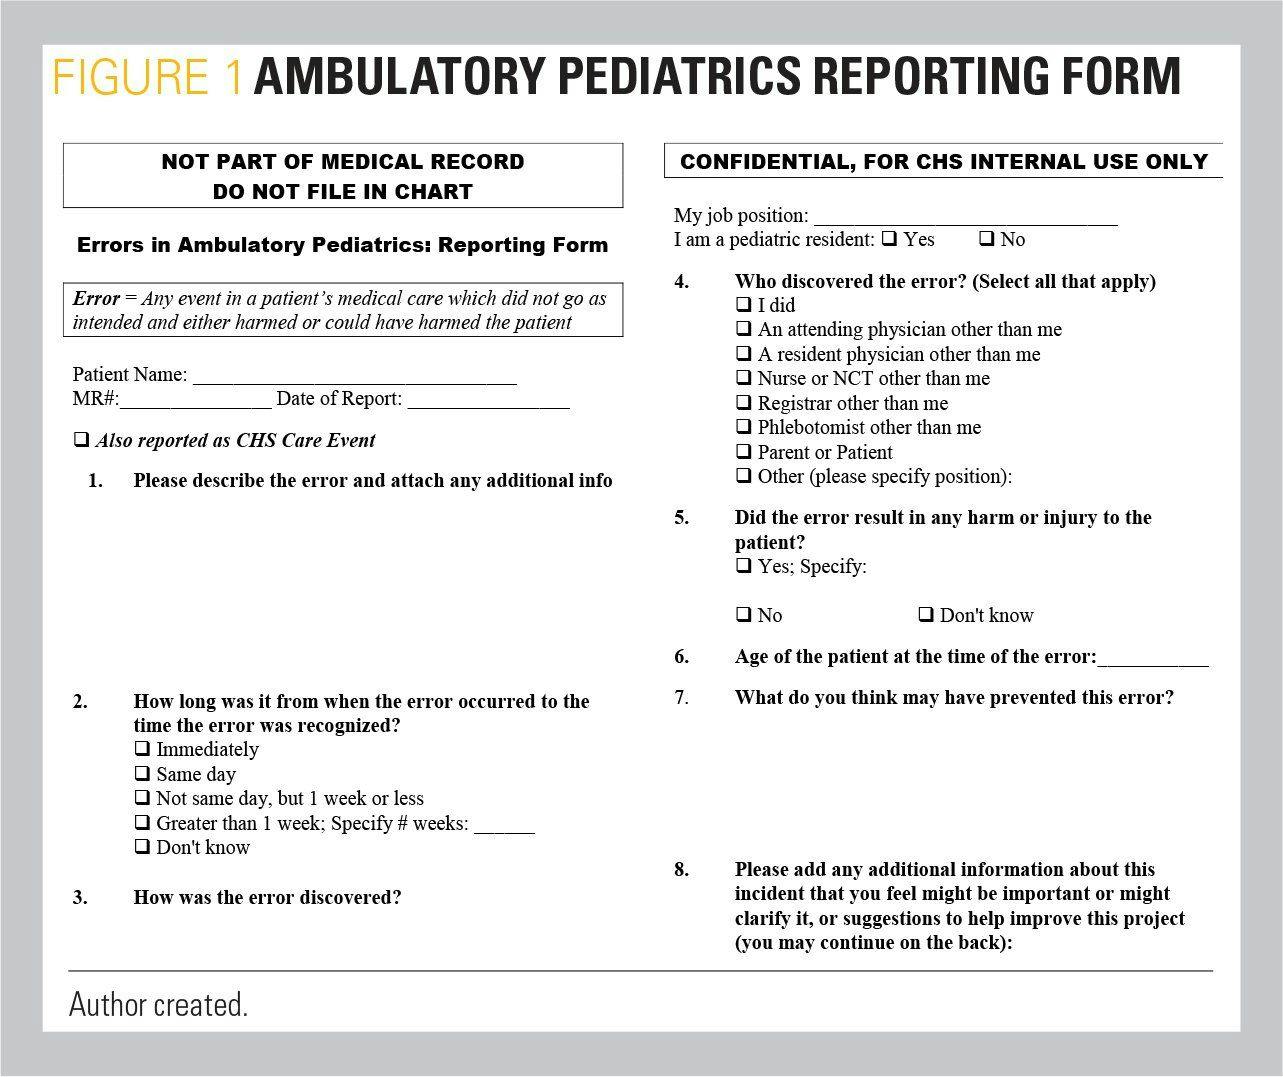 Ambulatory pediatrics reporting form